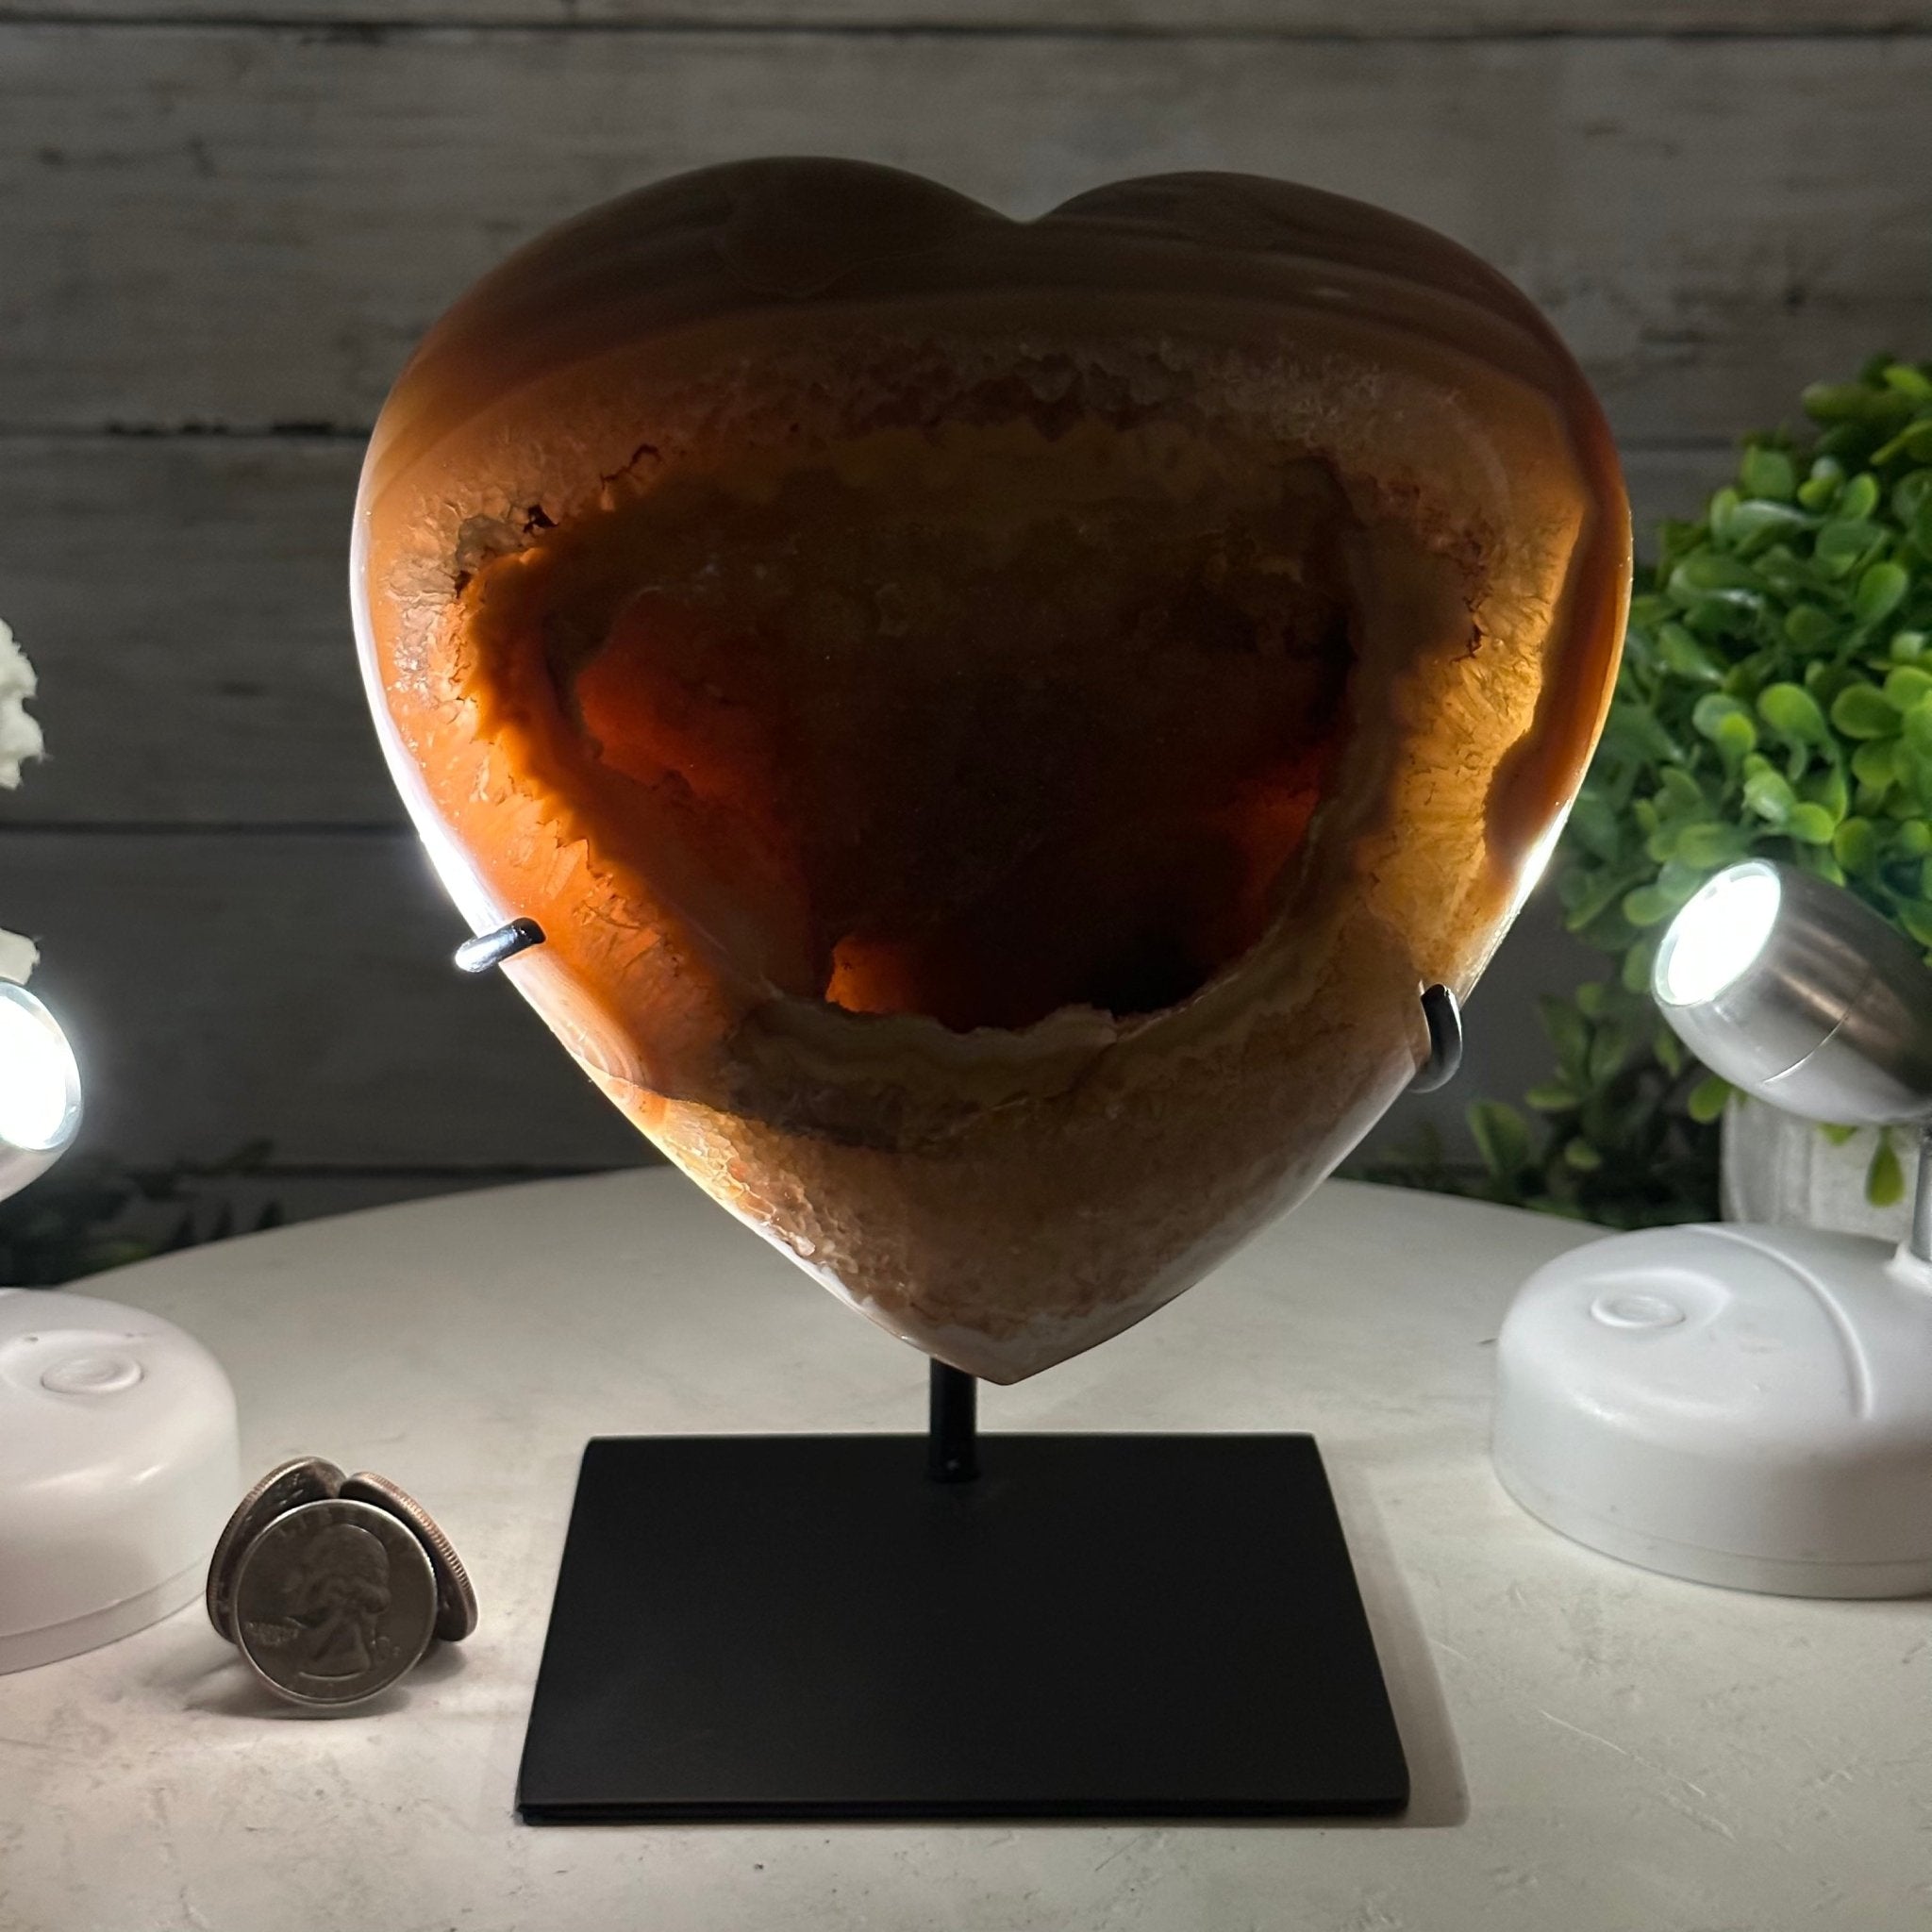 Polished Agate Heart Geode on a Metal Stand, 4.2 lbs & 7.1" Tall, Model #5468-0070 by Brazil Gems - Brazil GemsBrazil GemsPolished Agate Heart Geode on a Metal Stand, 4.2 lbs & 7.1" Tall, Model #5468-0070 by Brazil GemsHearts5468-0070